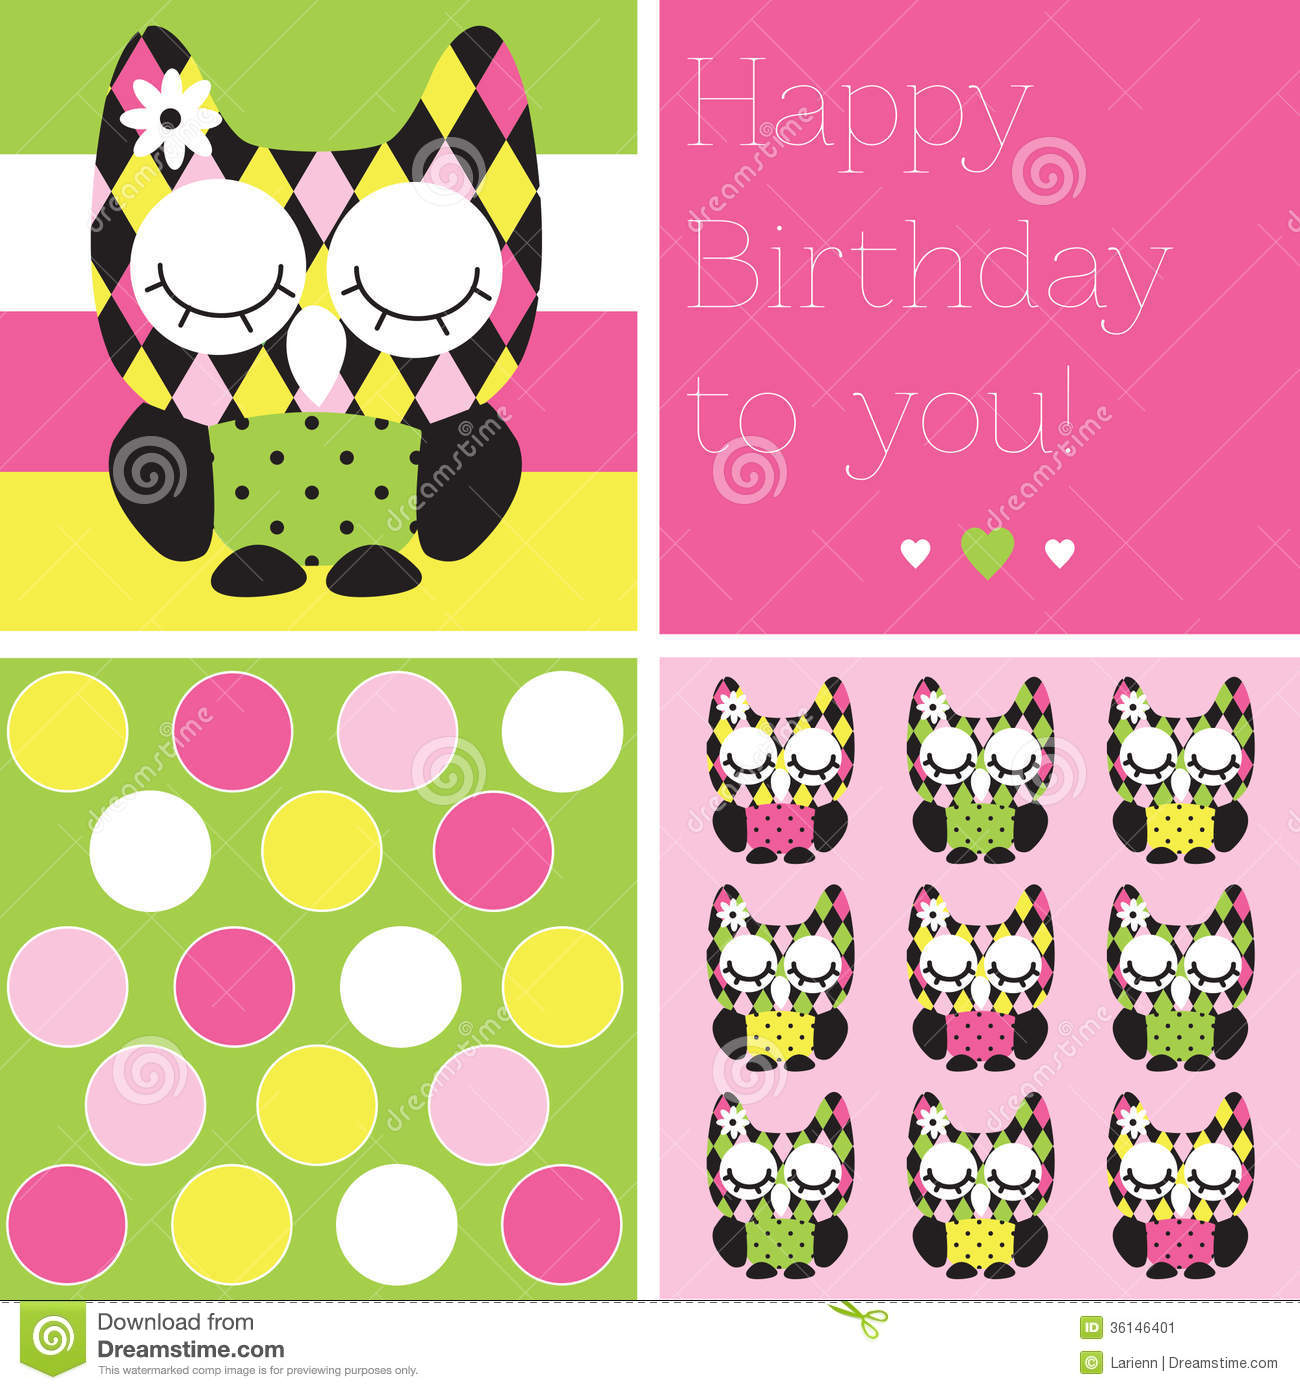 Happy Birthday Owl Illustration Stock Image   Image  36146401